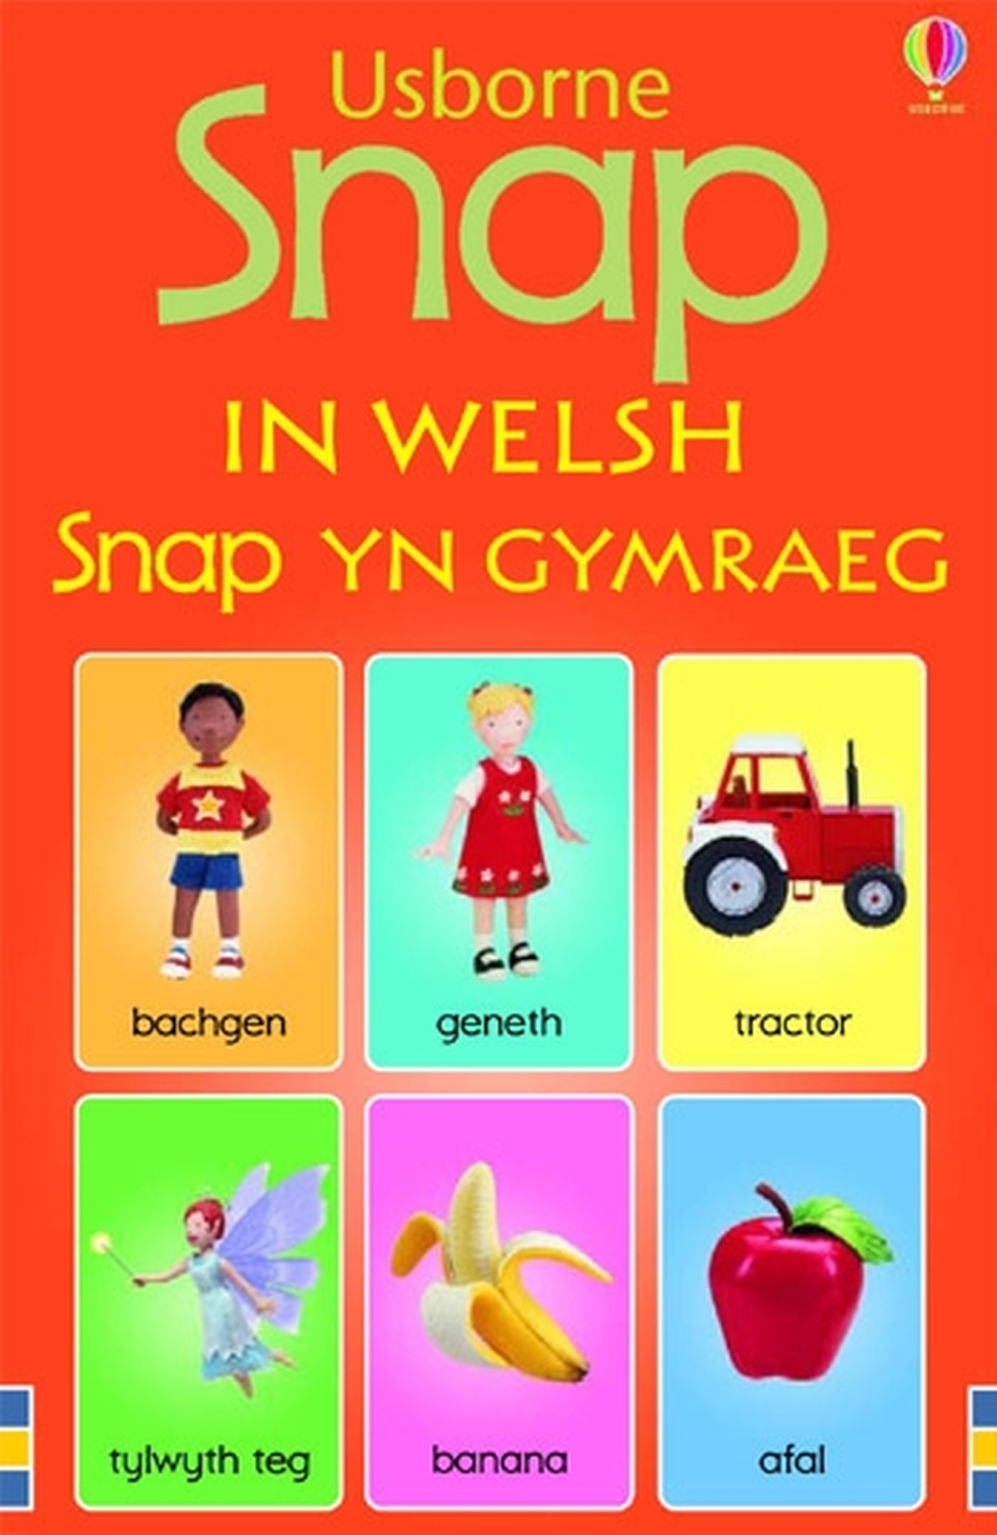 Usborne Welsh Snap Cards